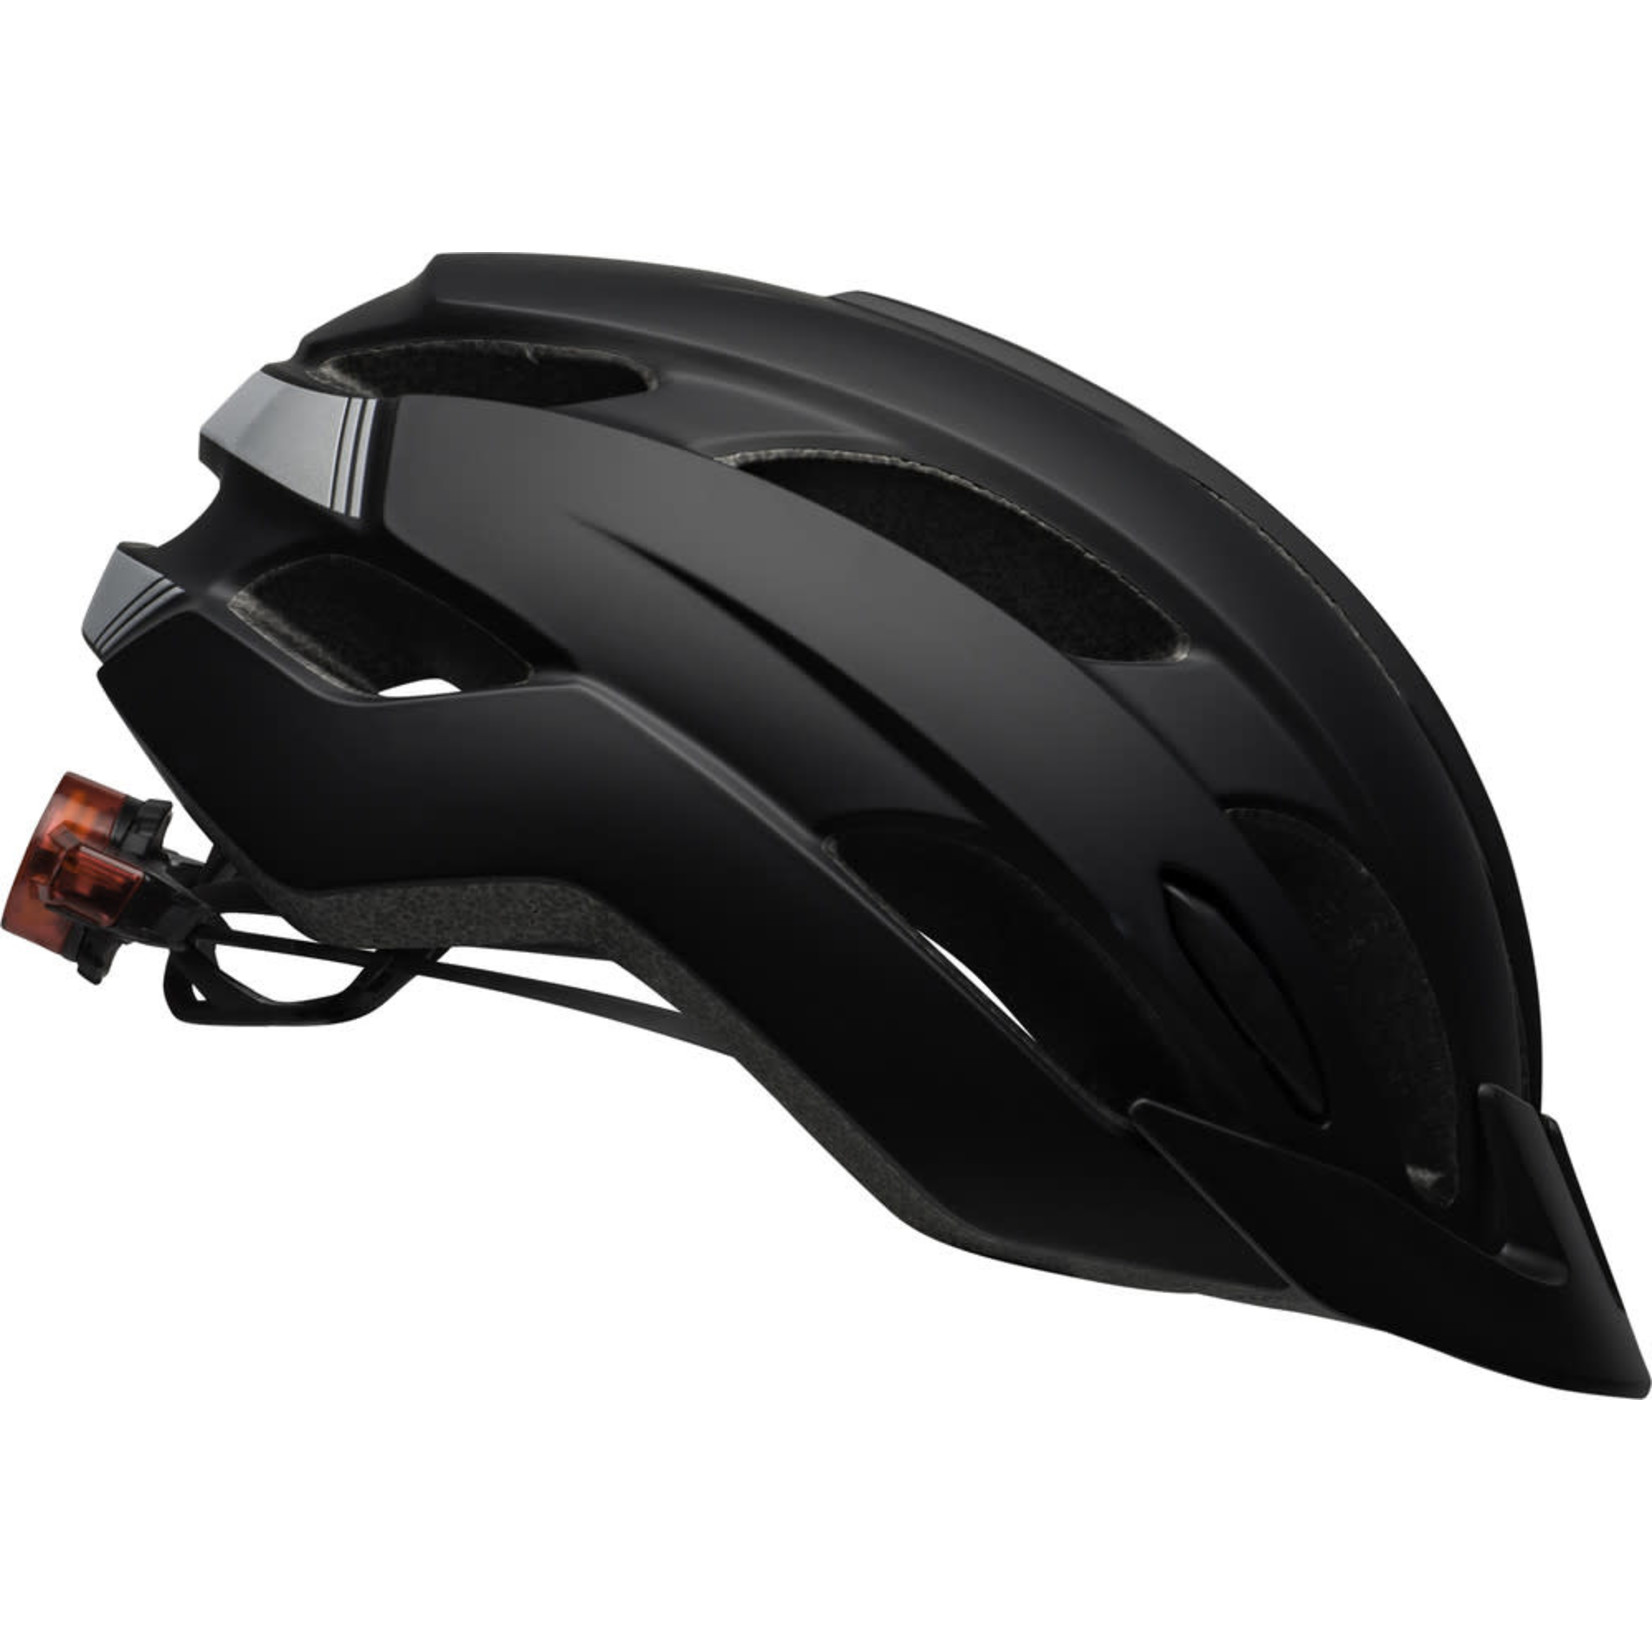 2021 Bell Trace LED MIPS Helmet